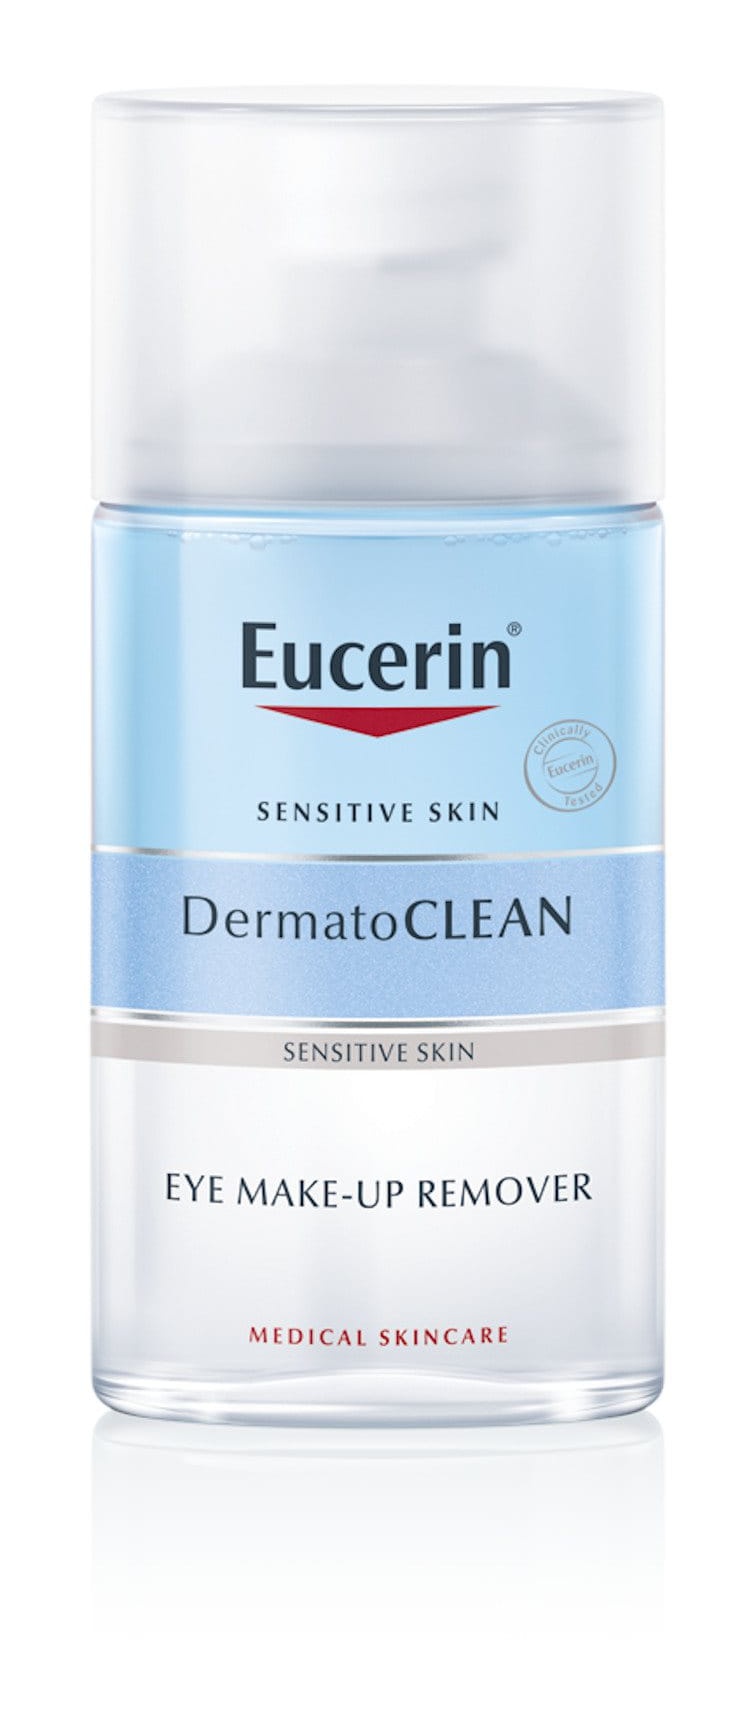 Eucerin DermatoCLEAN Eye Make-Up Remover